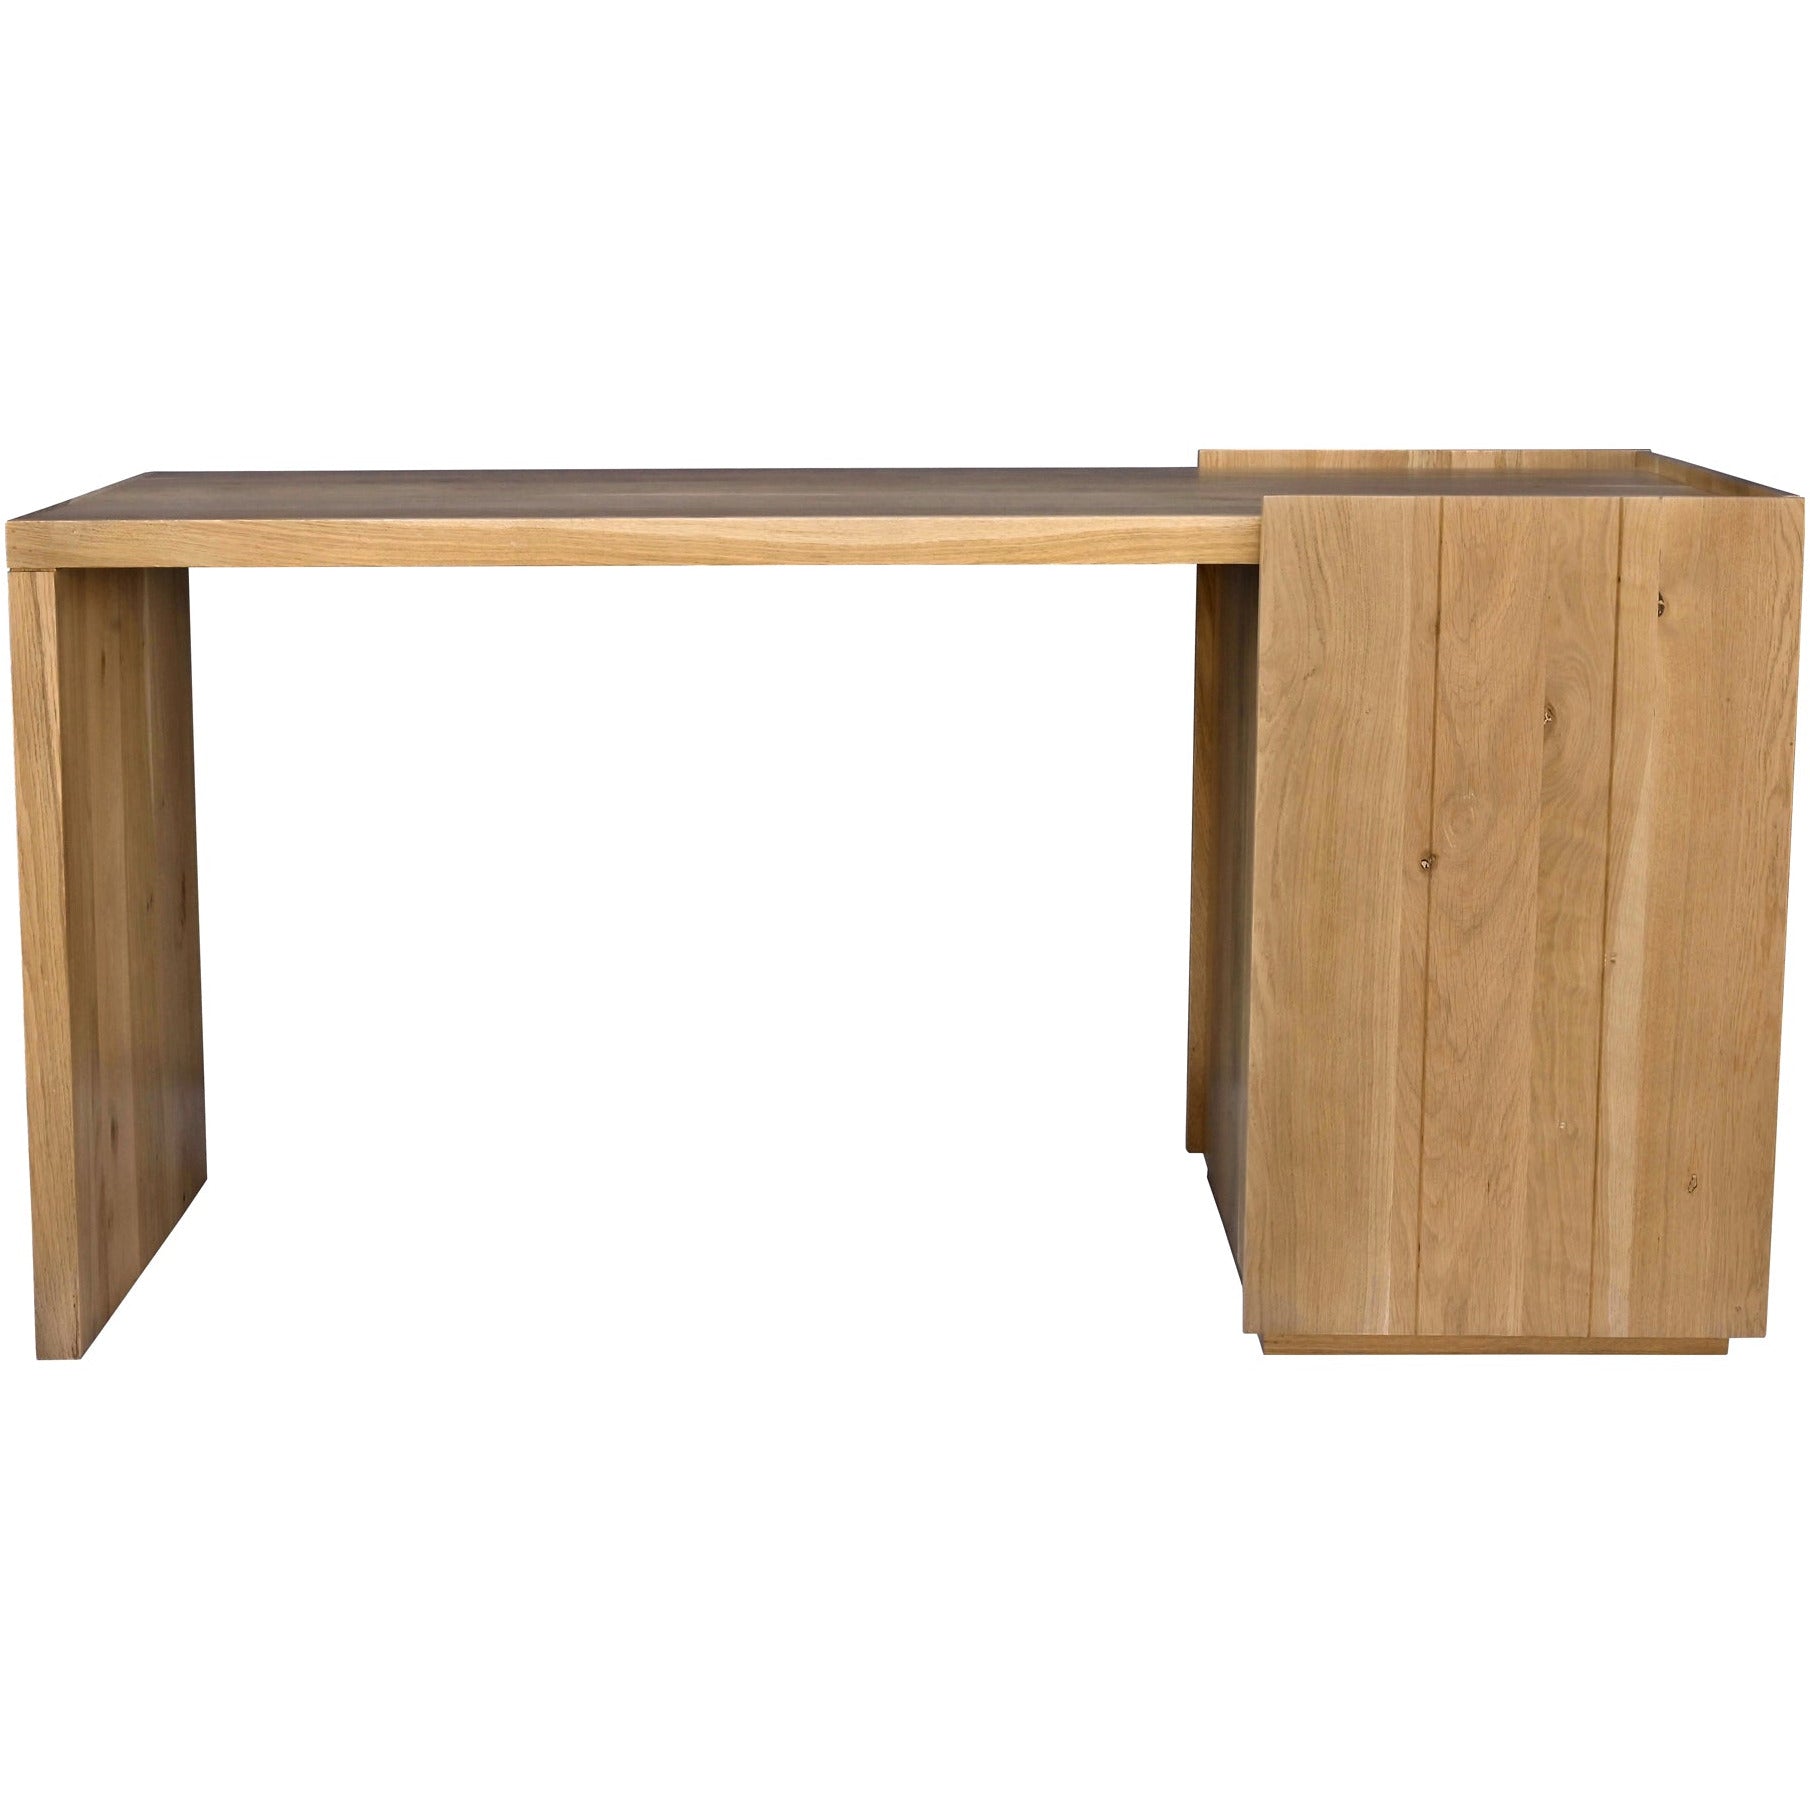 Plank desk